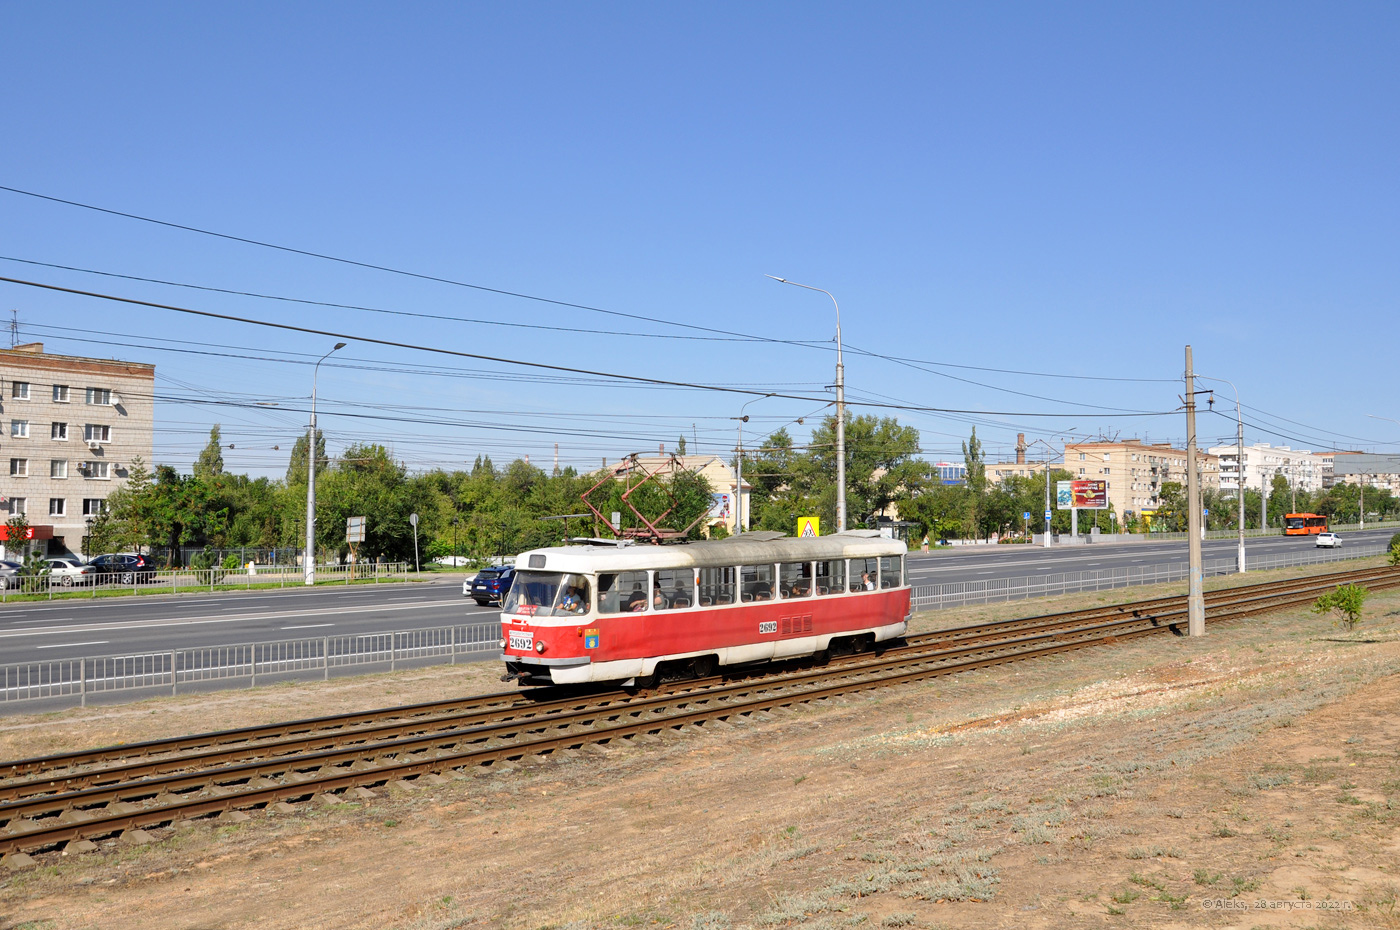 Волгоград, Tatra T3SU № 2692